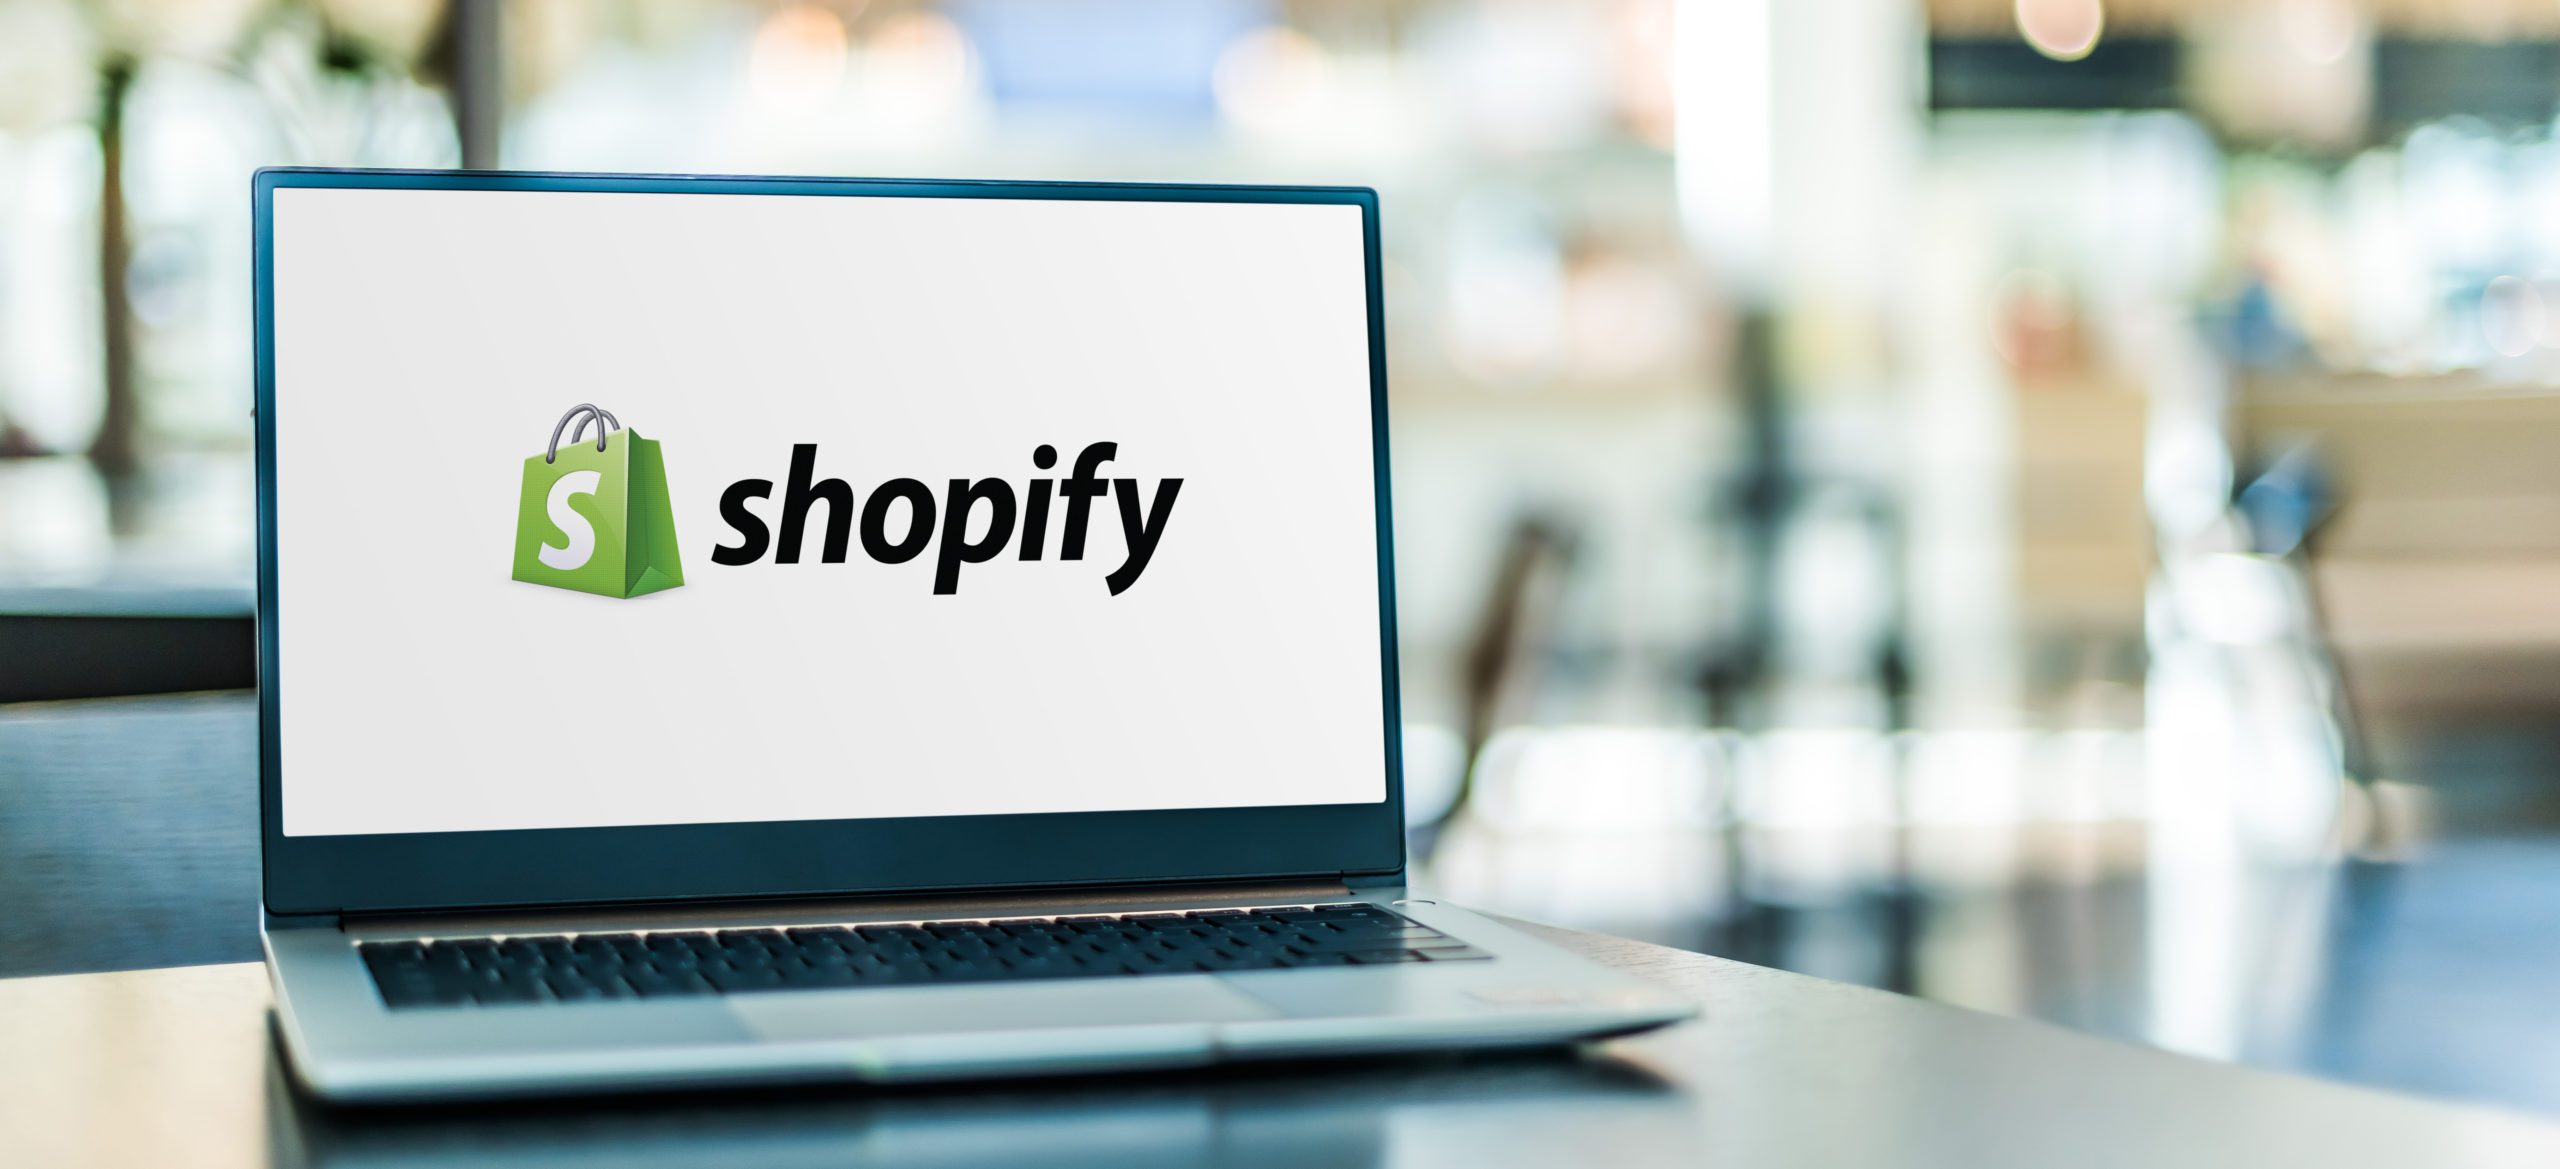 Shopify Stock Struggles After Announcing Mass Firing